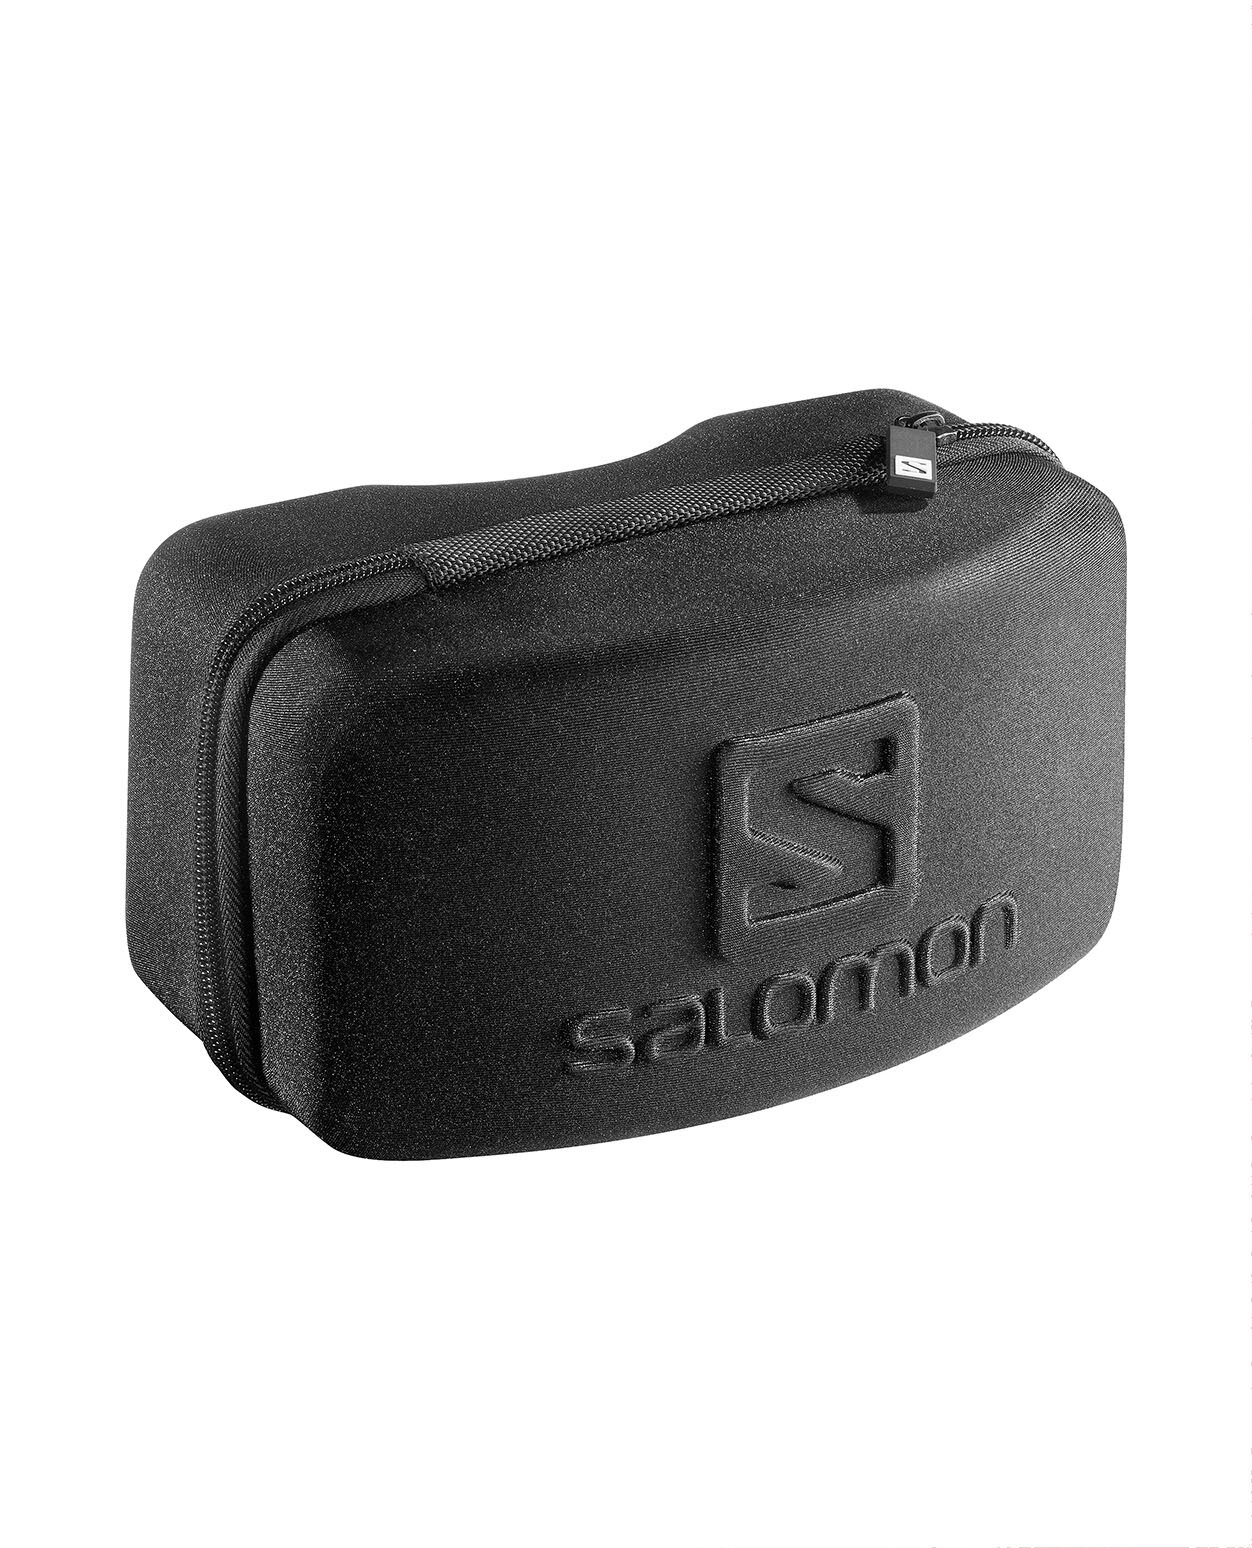 Salomon Radium Pro Sigma Black Montana/BG